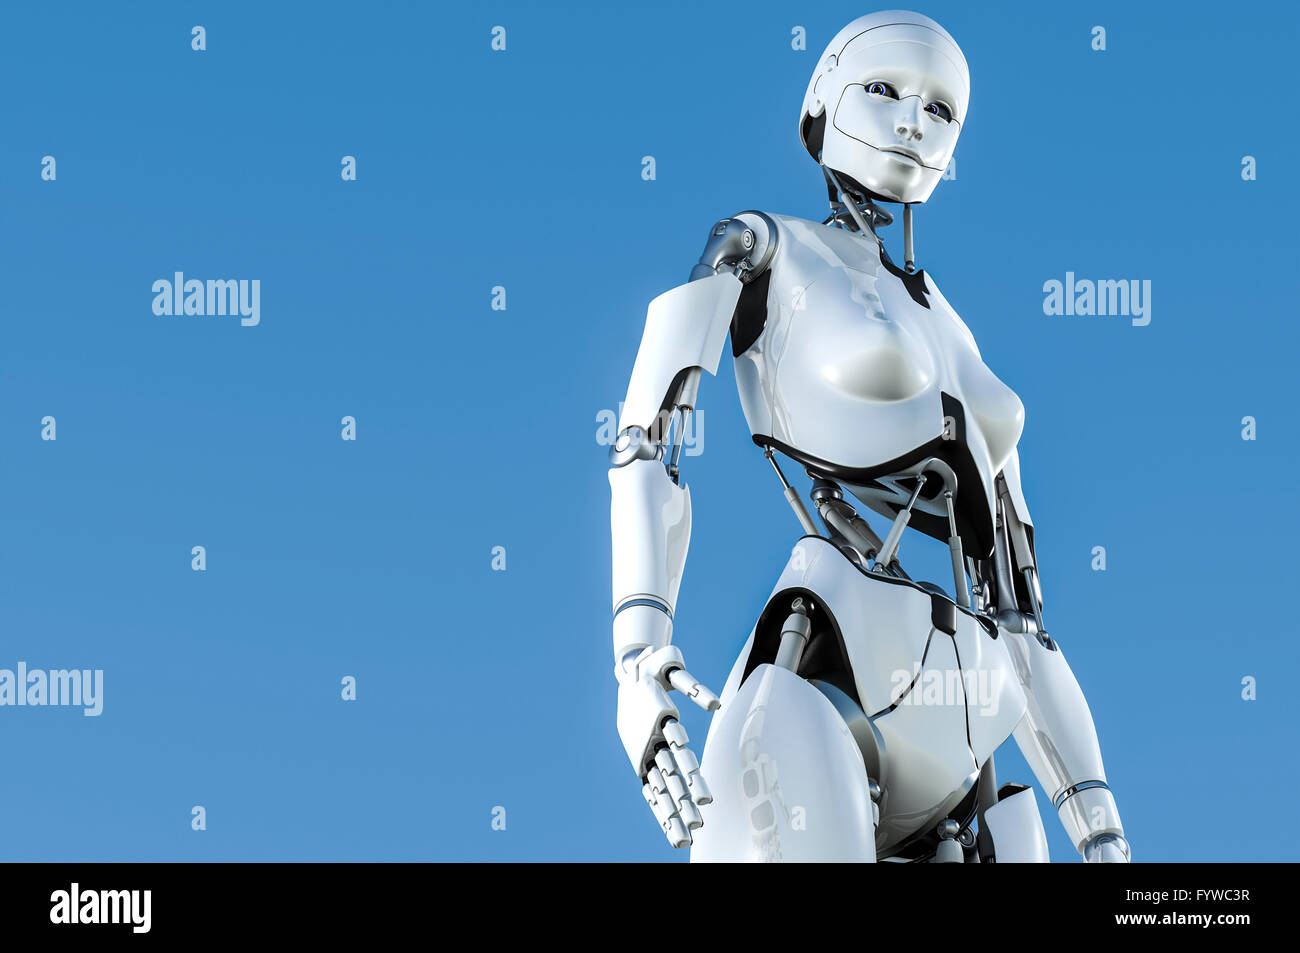 Femmina robot umanoide Foto stock - Alamy